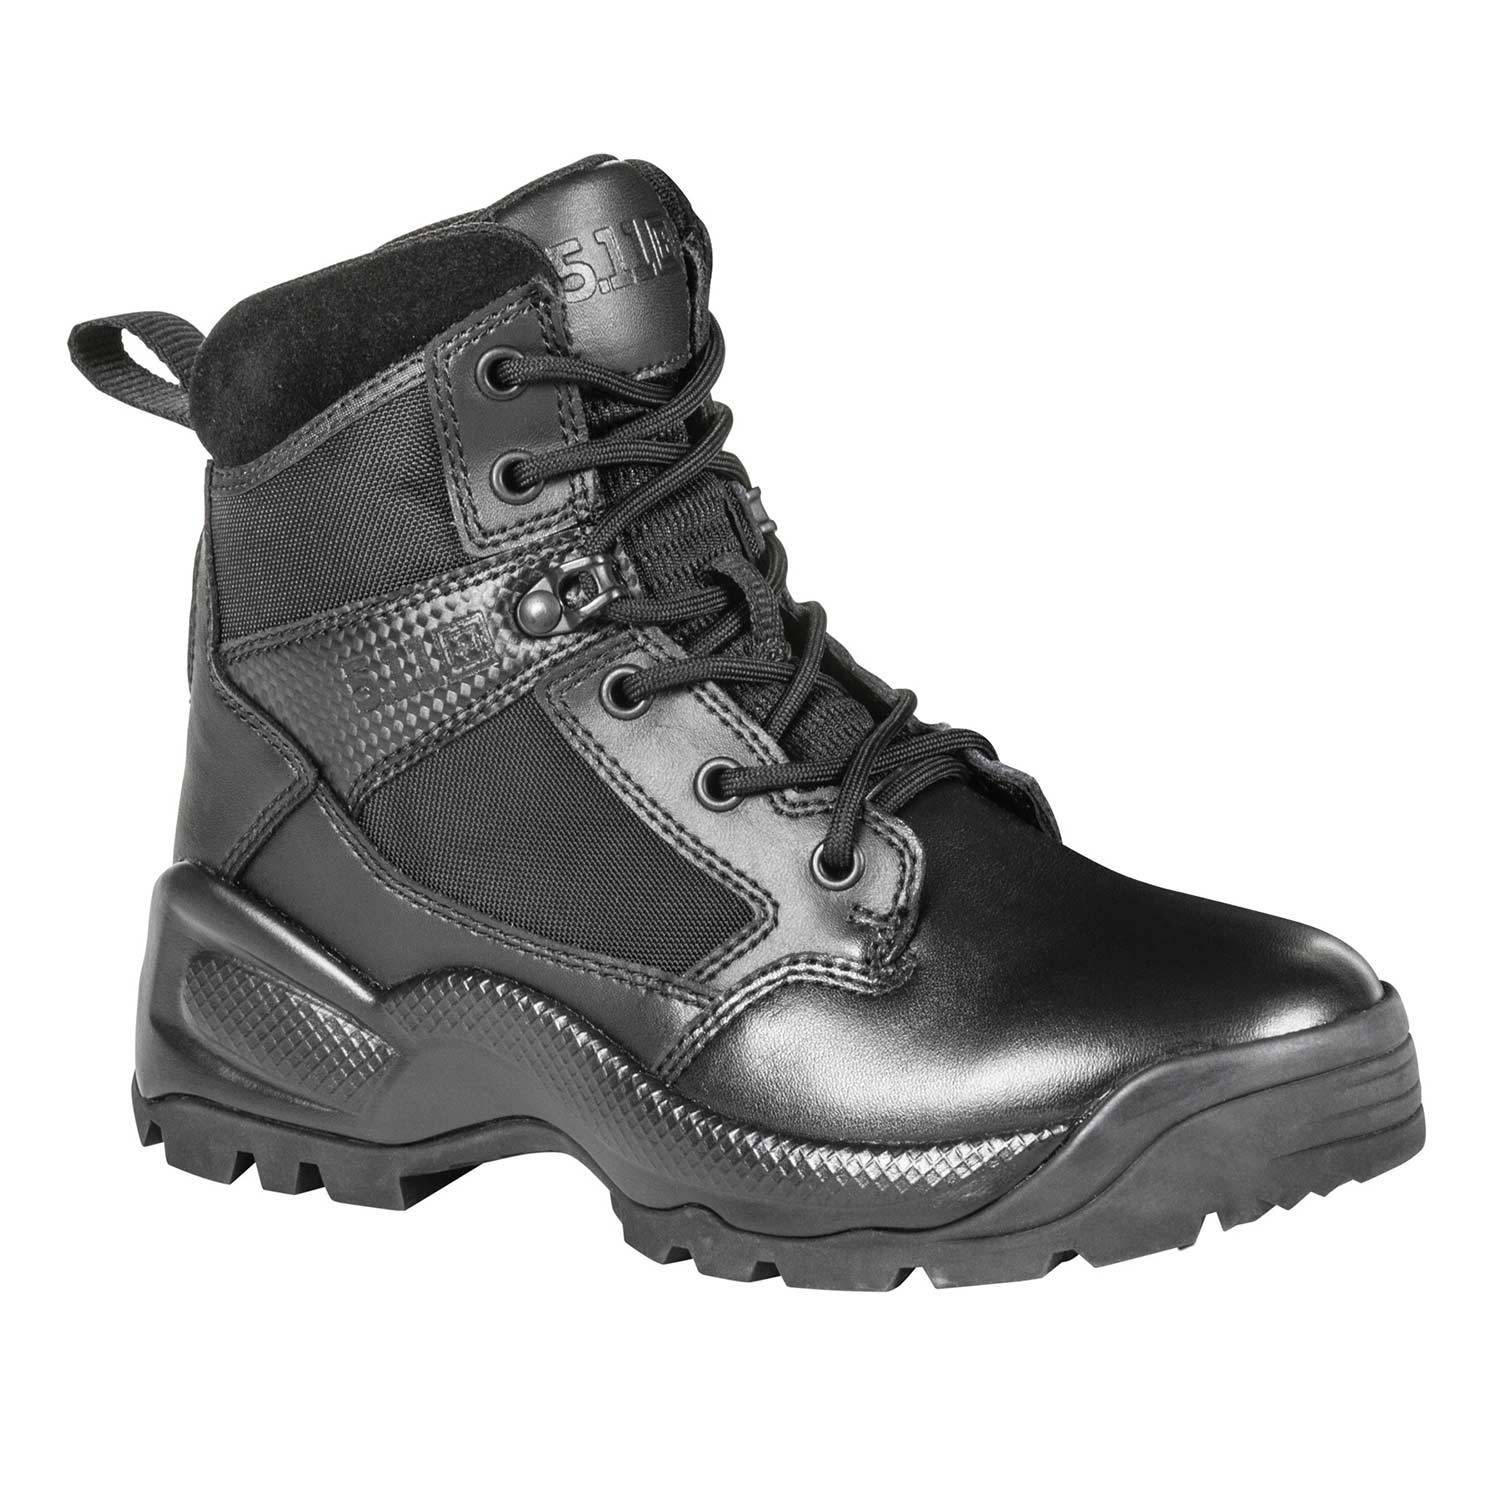 511 tactical side zip boots